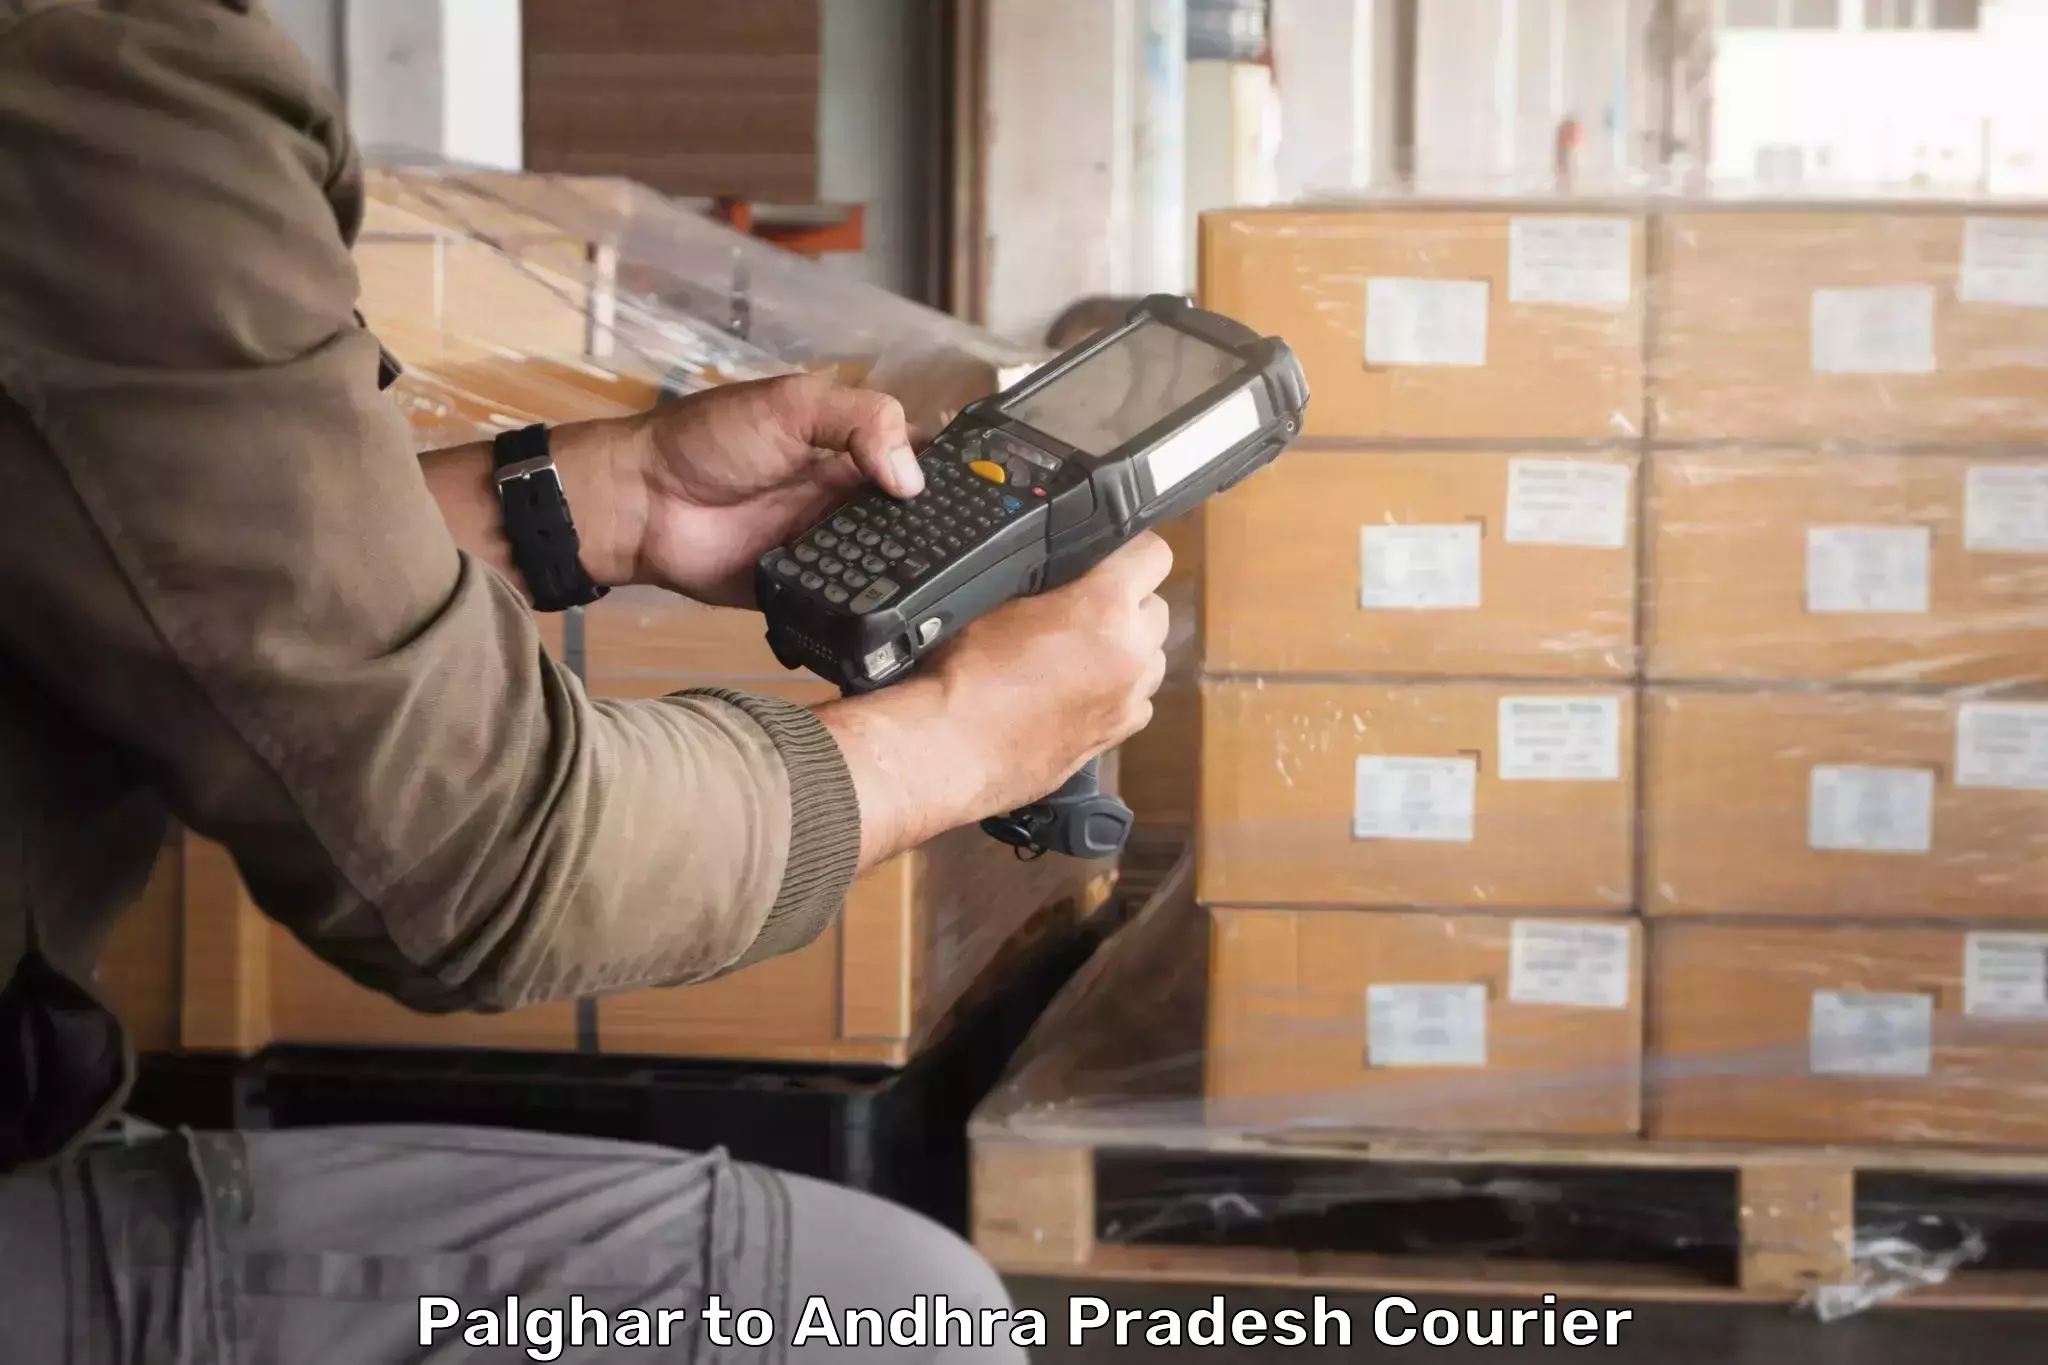 User-friendly courier app Palghar to Tadipatri